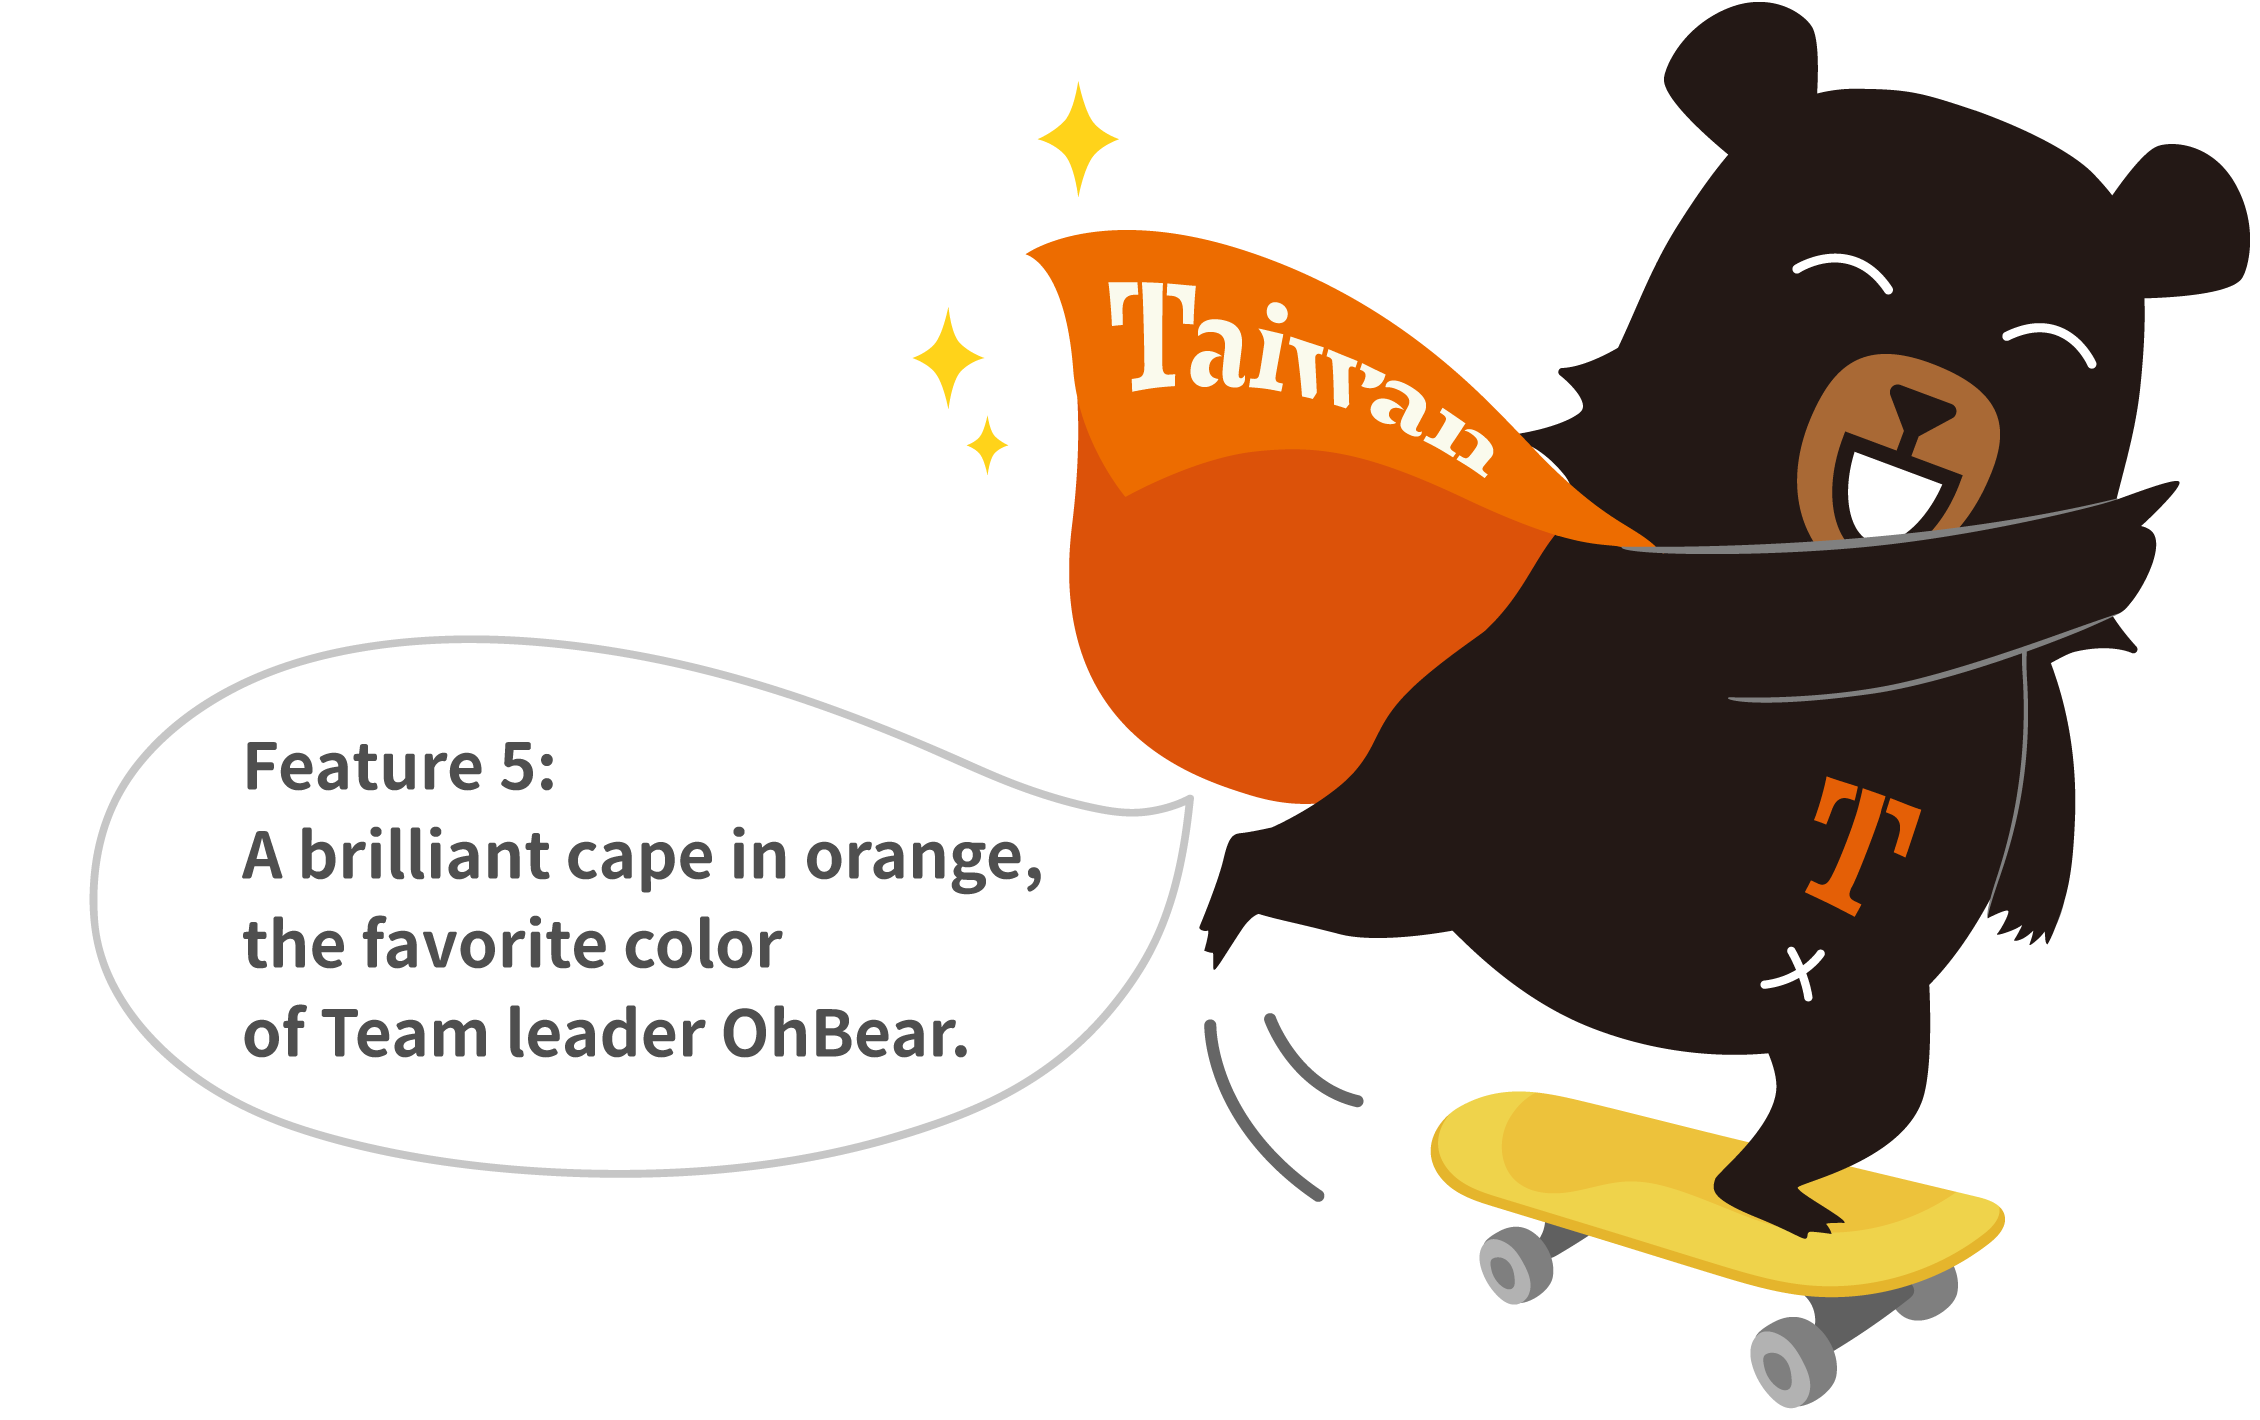 Feature 5:
A brilliant cape in orange, the favorite color of Team leader OhBear.
